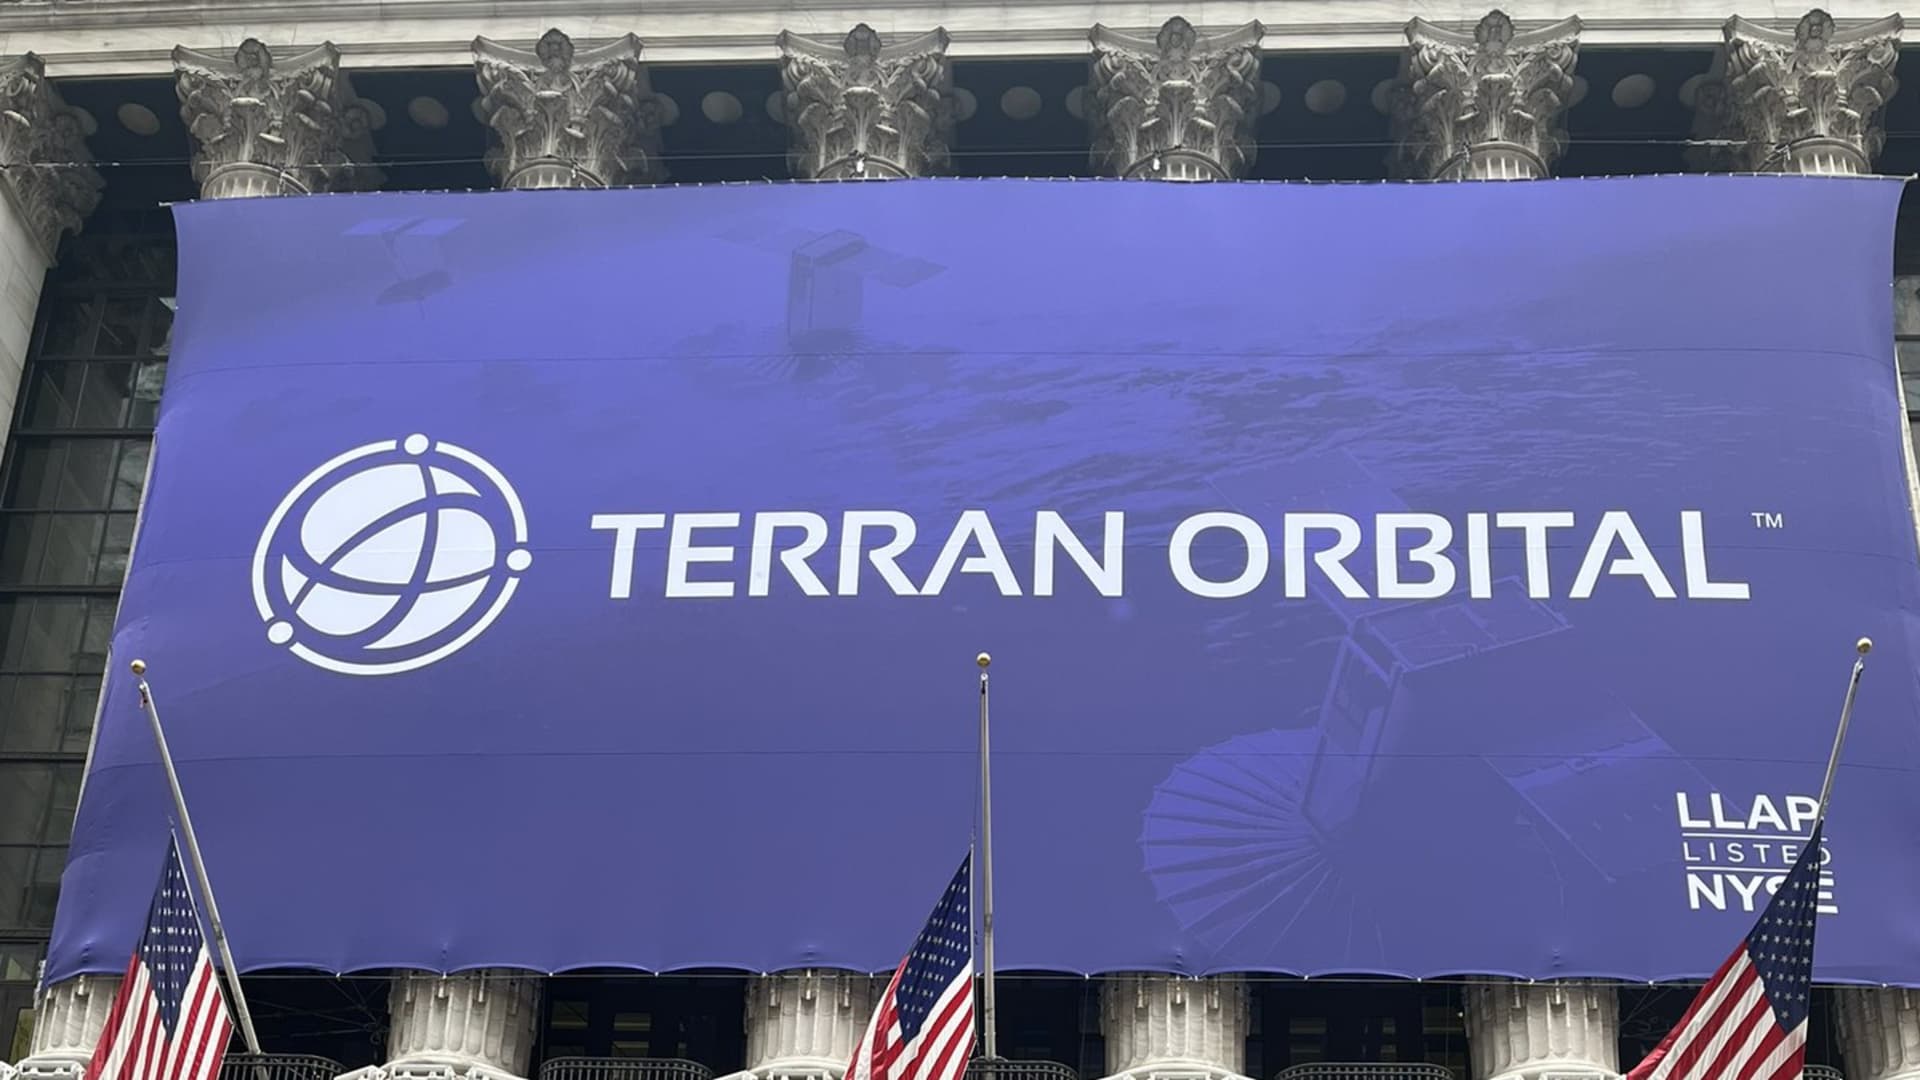 Terran Orbital stock rises after Lockheed Martin invests $100 million